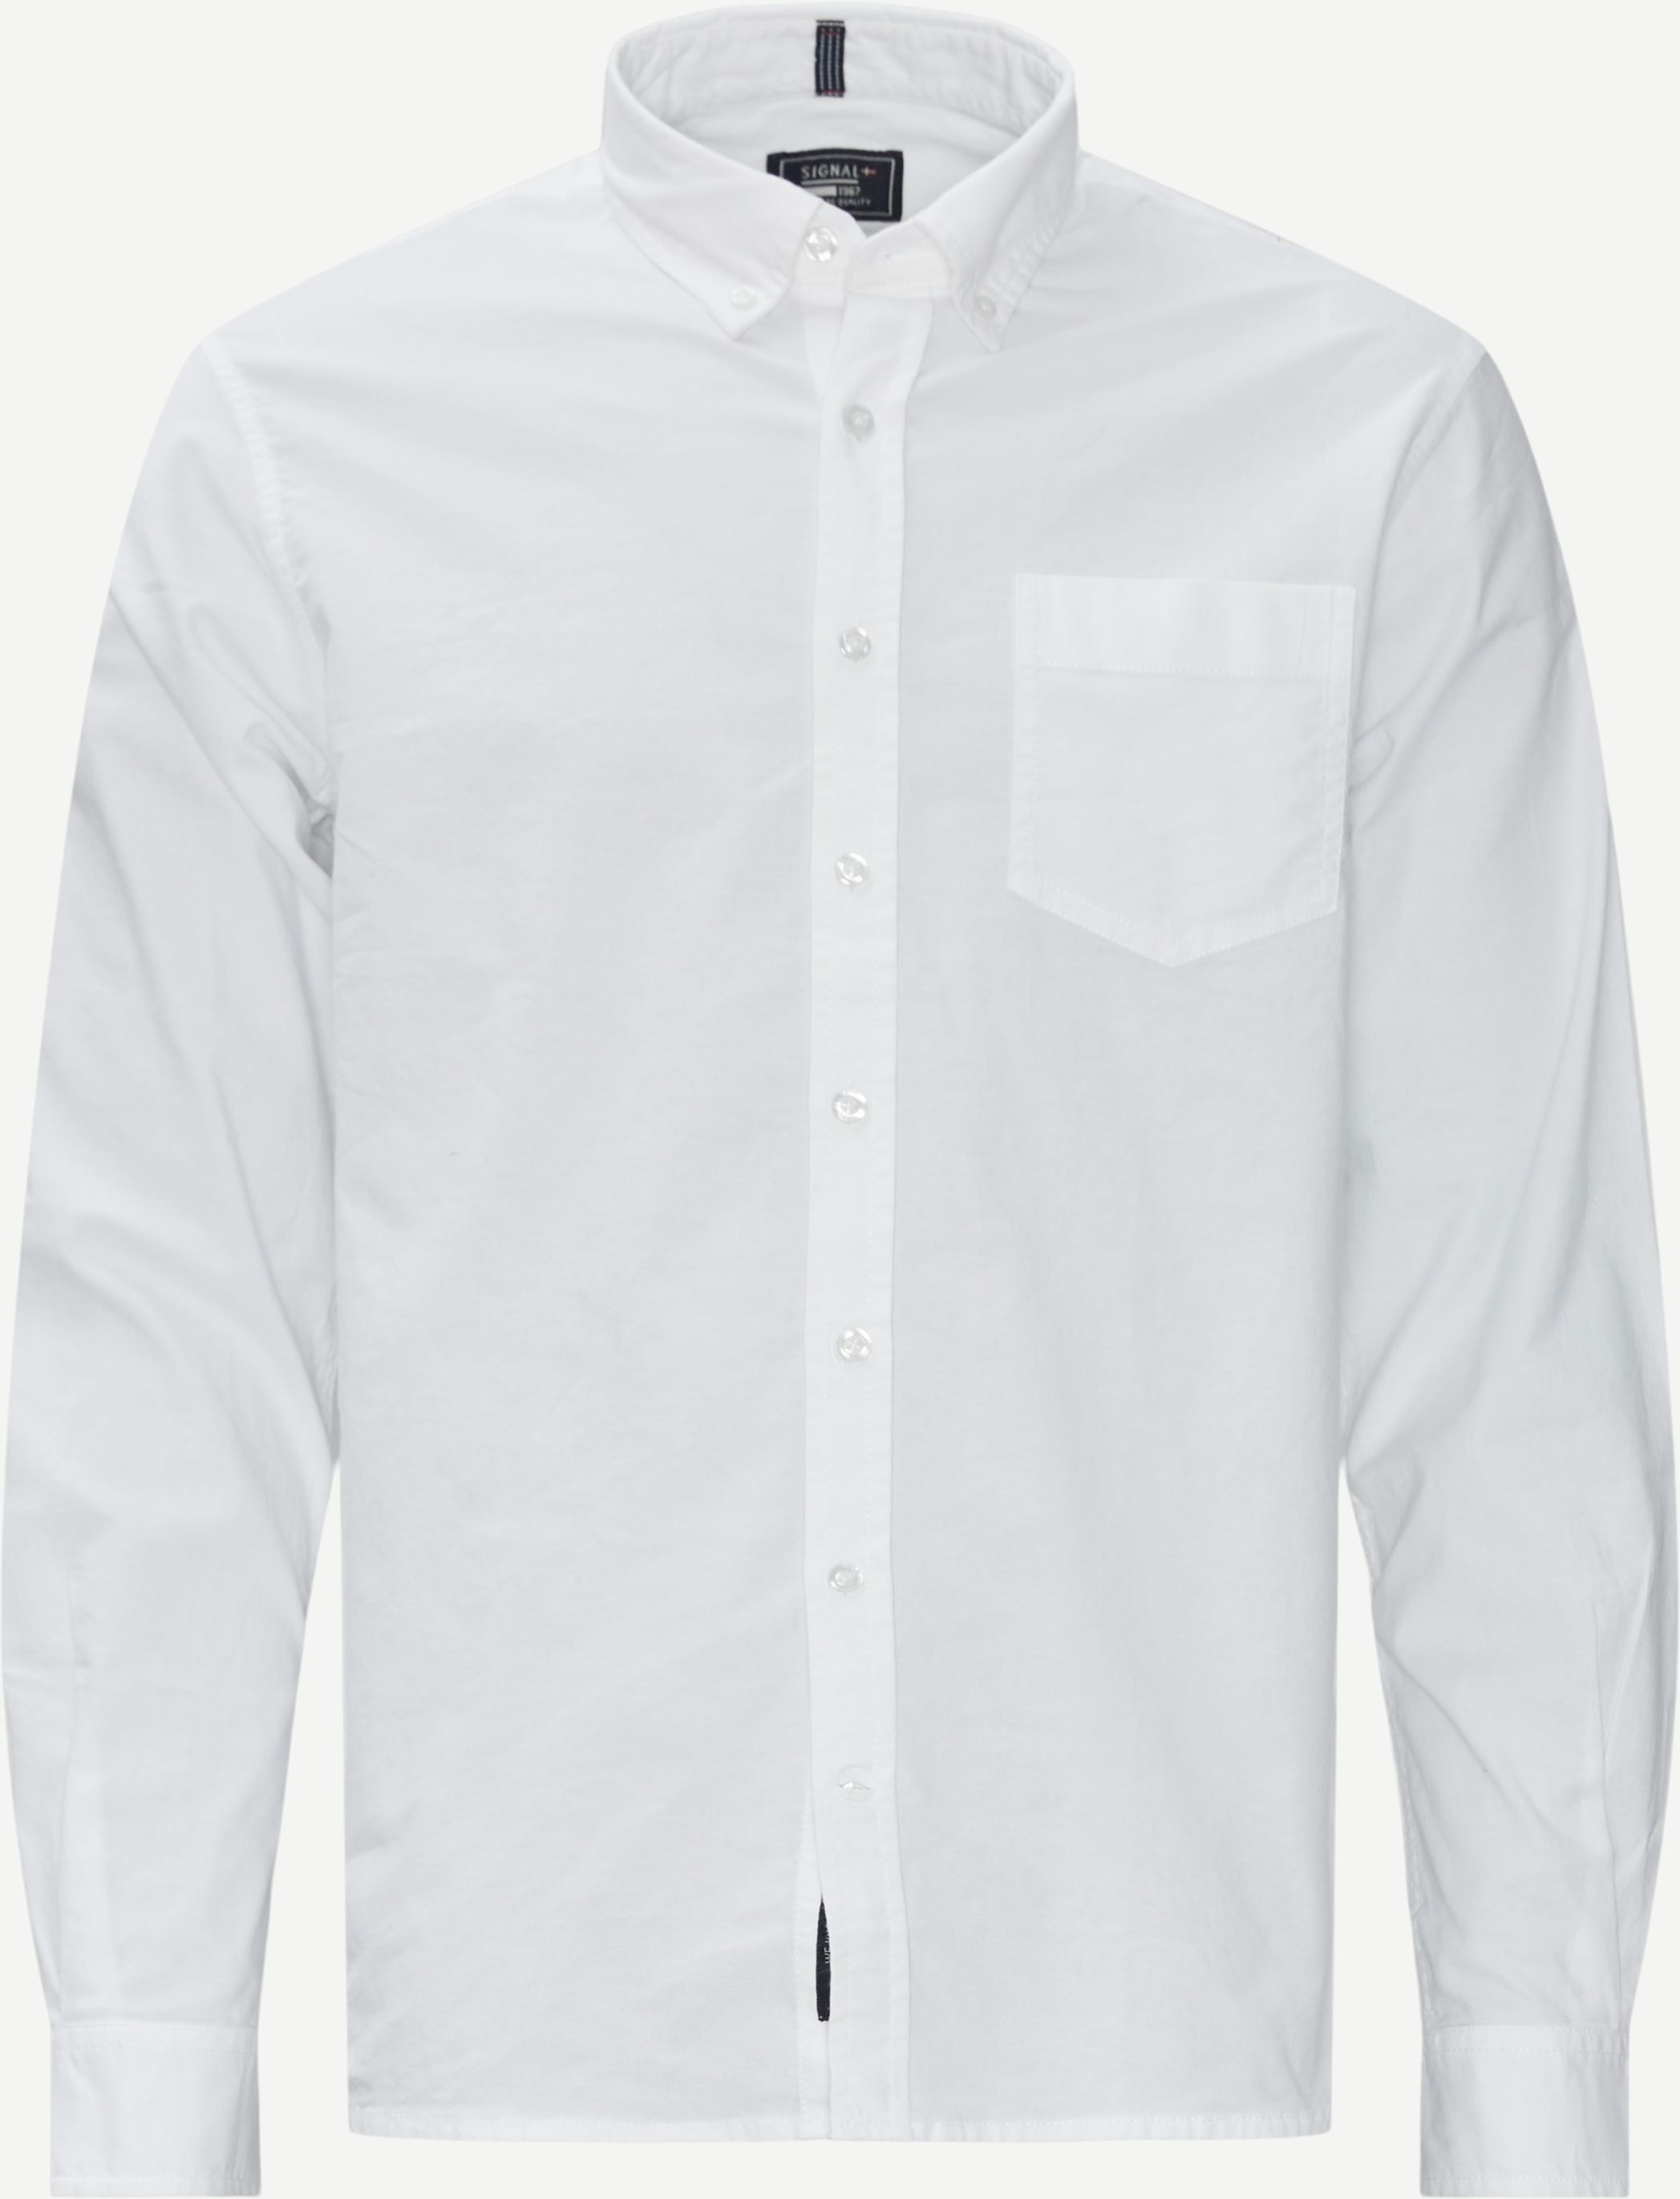 Signal Shirts 25001 White